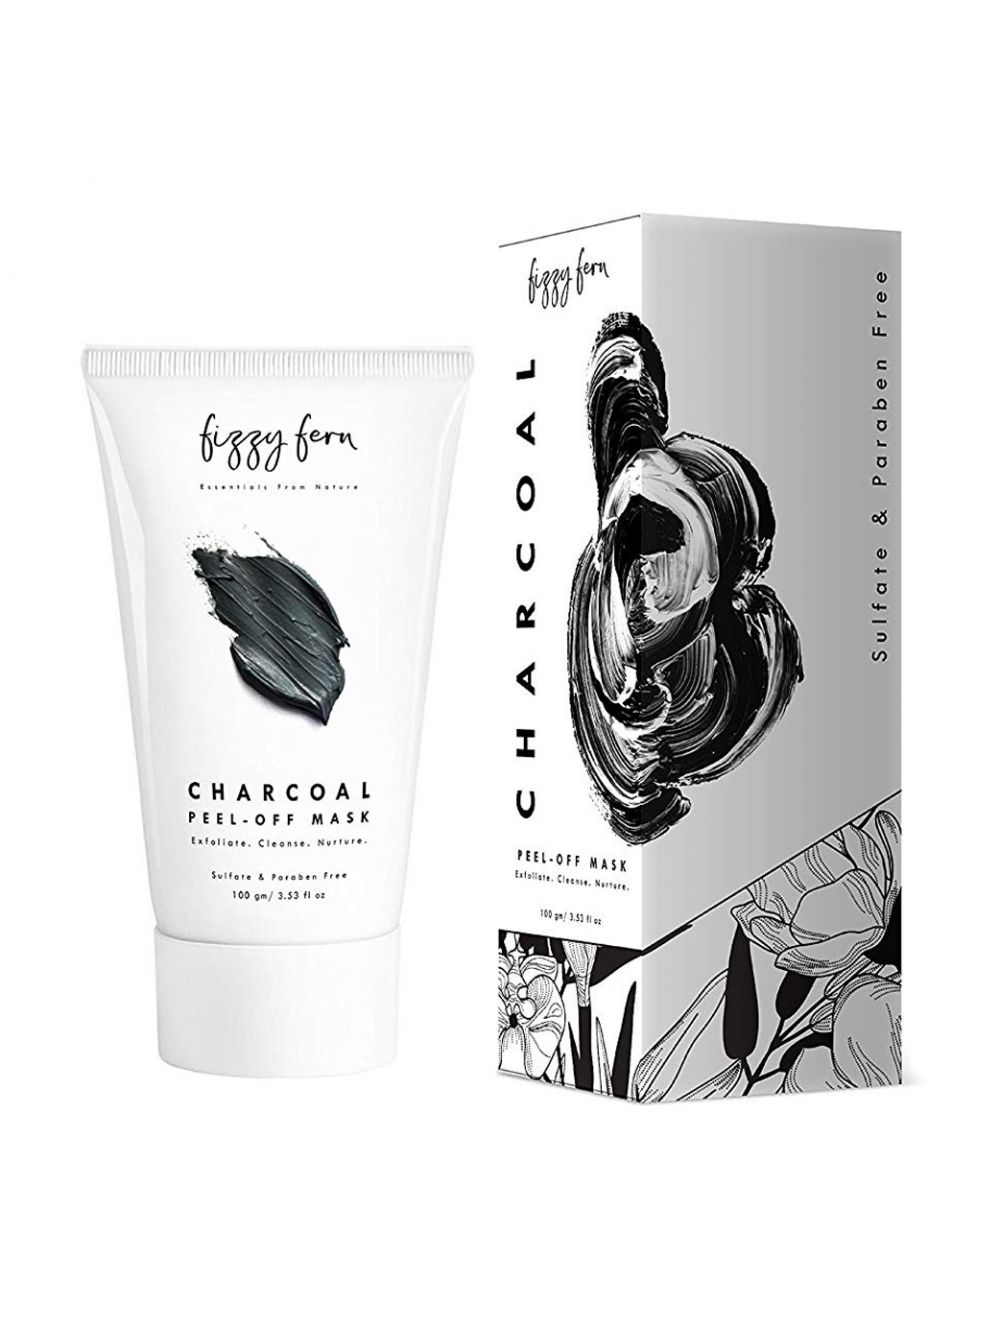 Fizzy Fern Charcoal Peel-Off Mask (100gm) - Niram